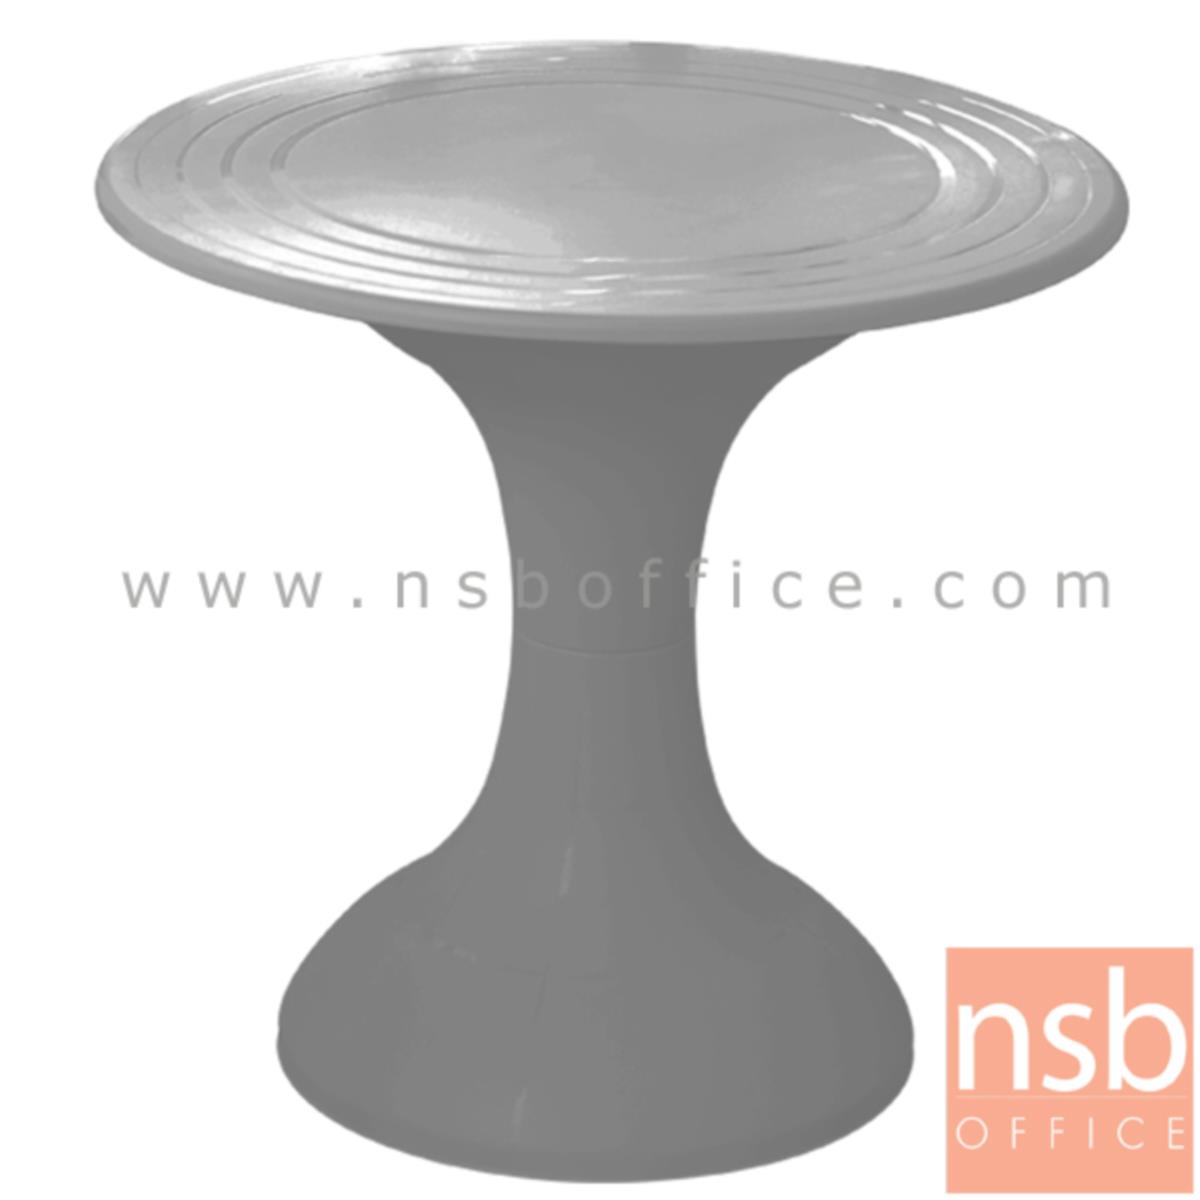 A14A046:โต๊ะกลมถ้วยโมเดิร์นพลาสติก (ABS)  ขนาด 80Di*74H cm. 